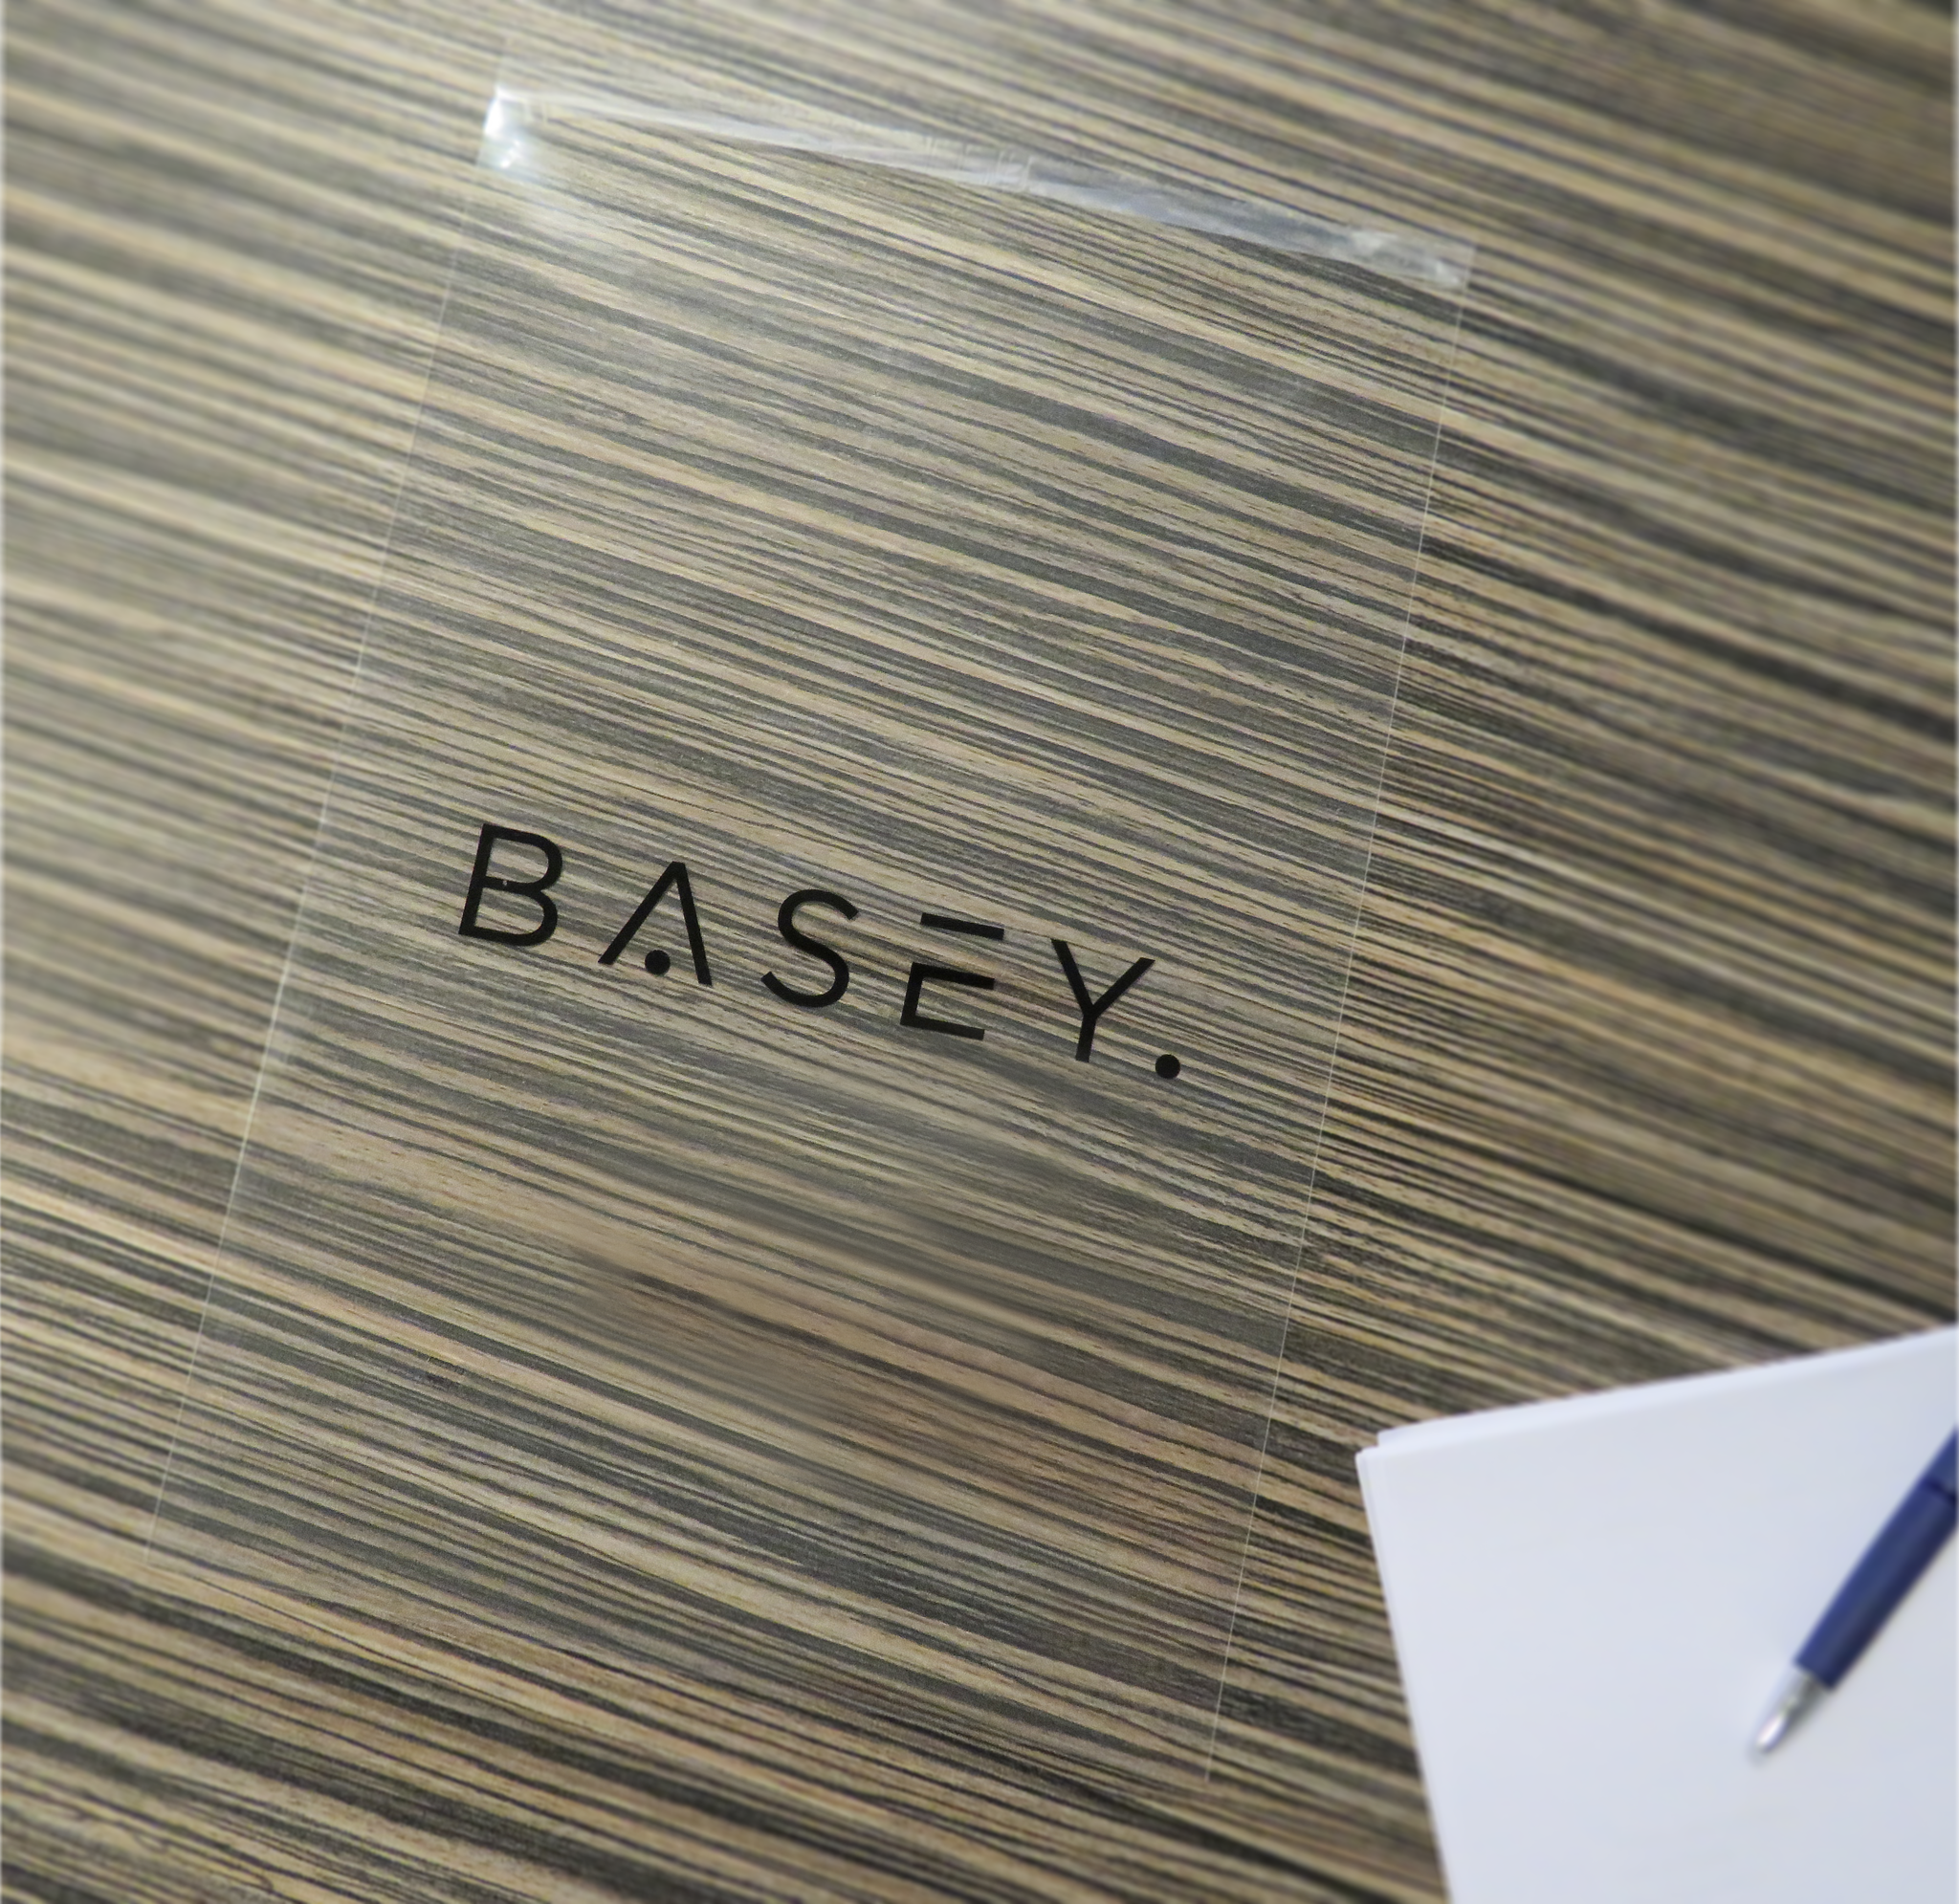 BASEY. BASEY. iPad Pro 11 inch (2020) Screenprotector